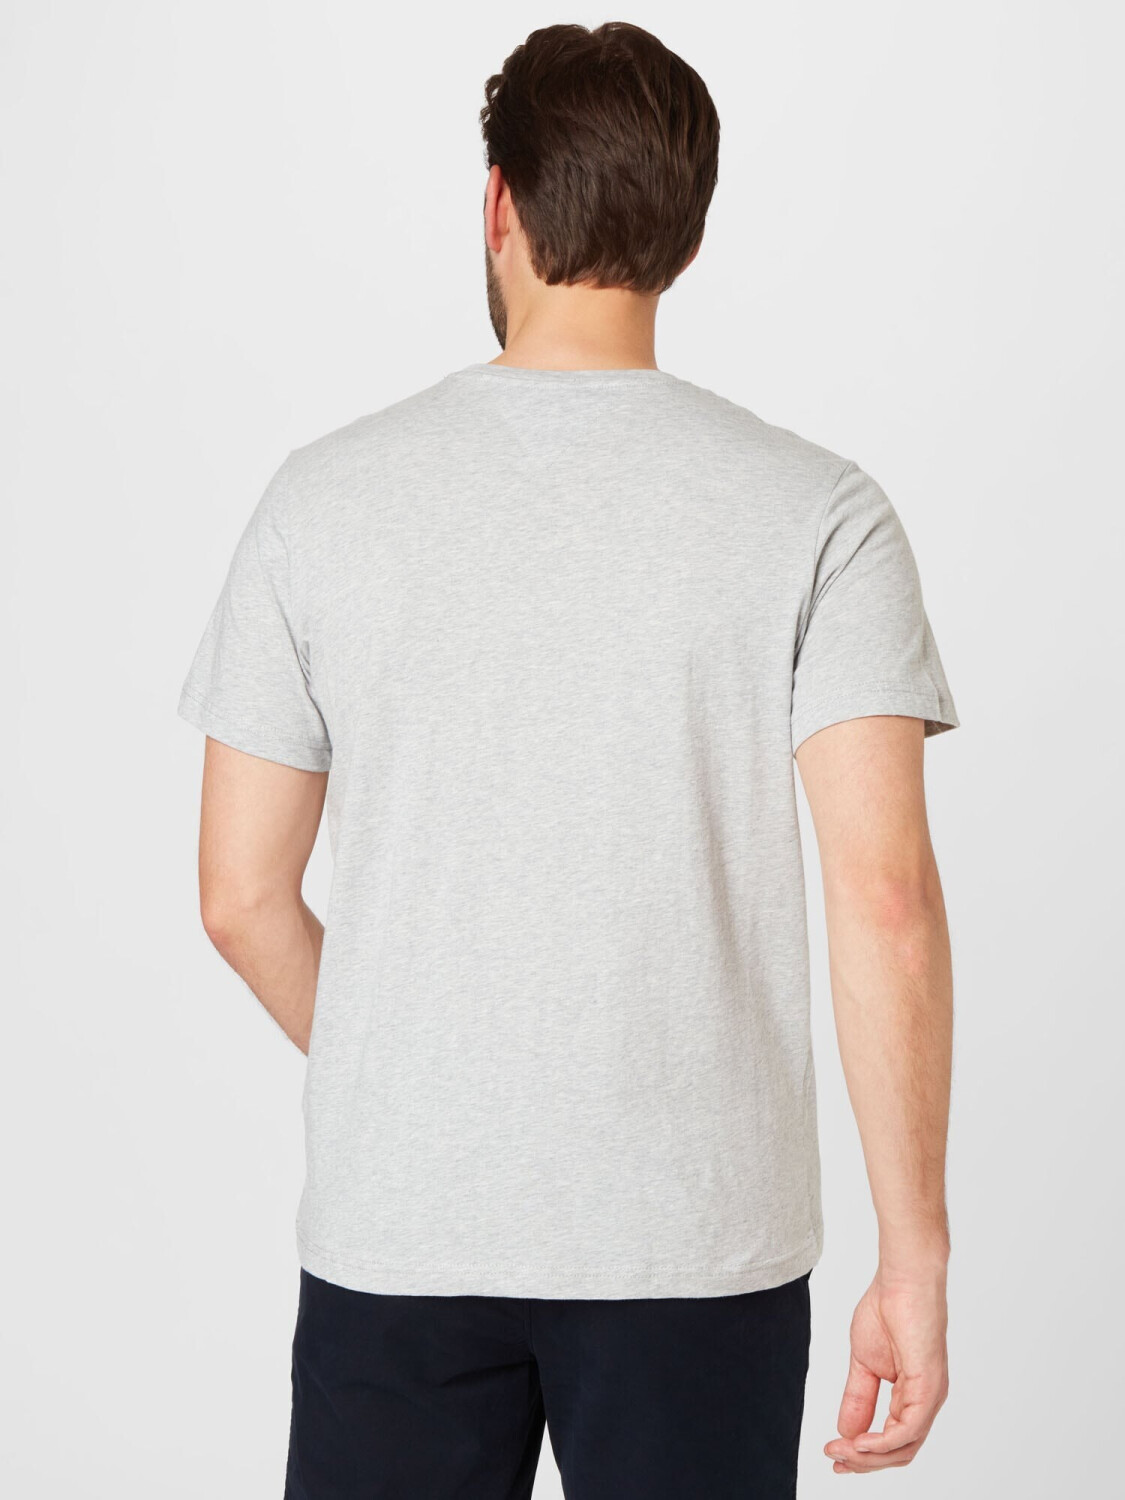 Tommy Hilfiger Homme T-Shirt Manches Courtes Encolure Ronde, Blanc